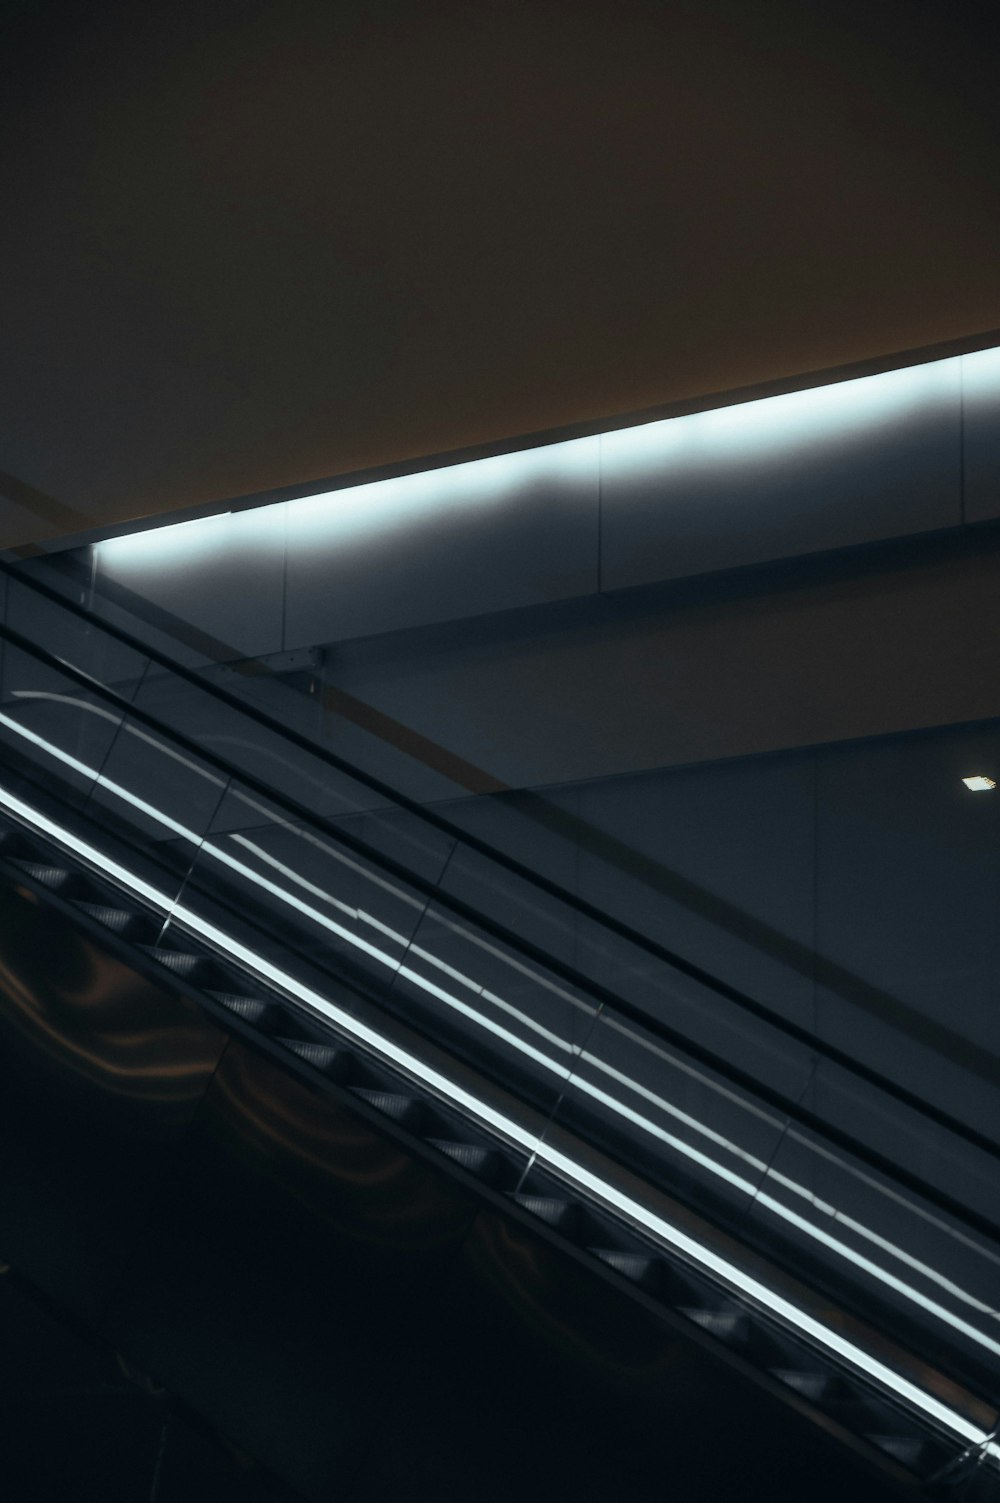 a blurry image of a hallway